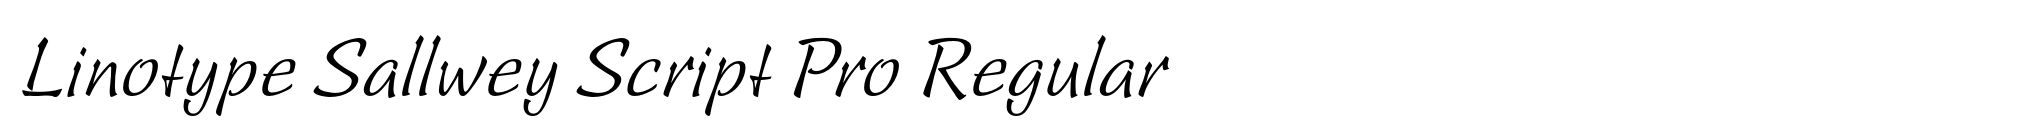 Linotype Sallwey Script Pro Regular image